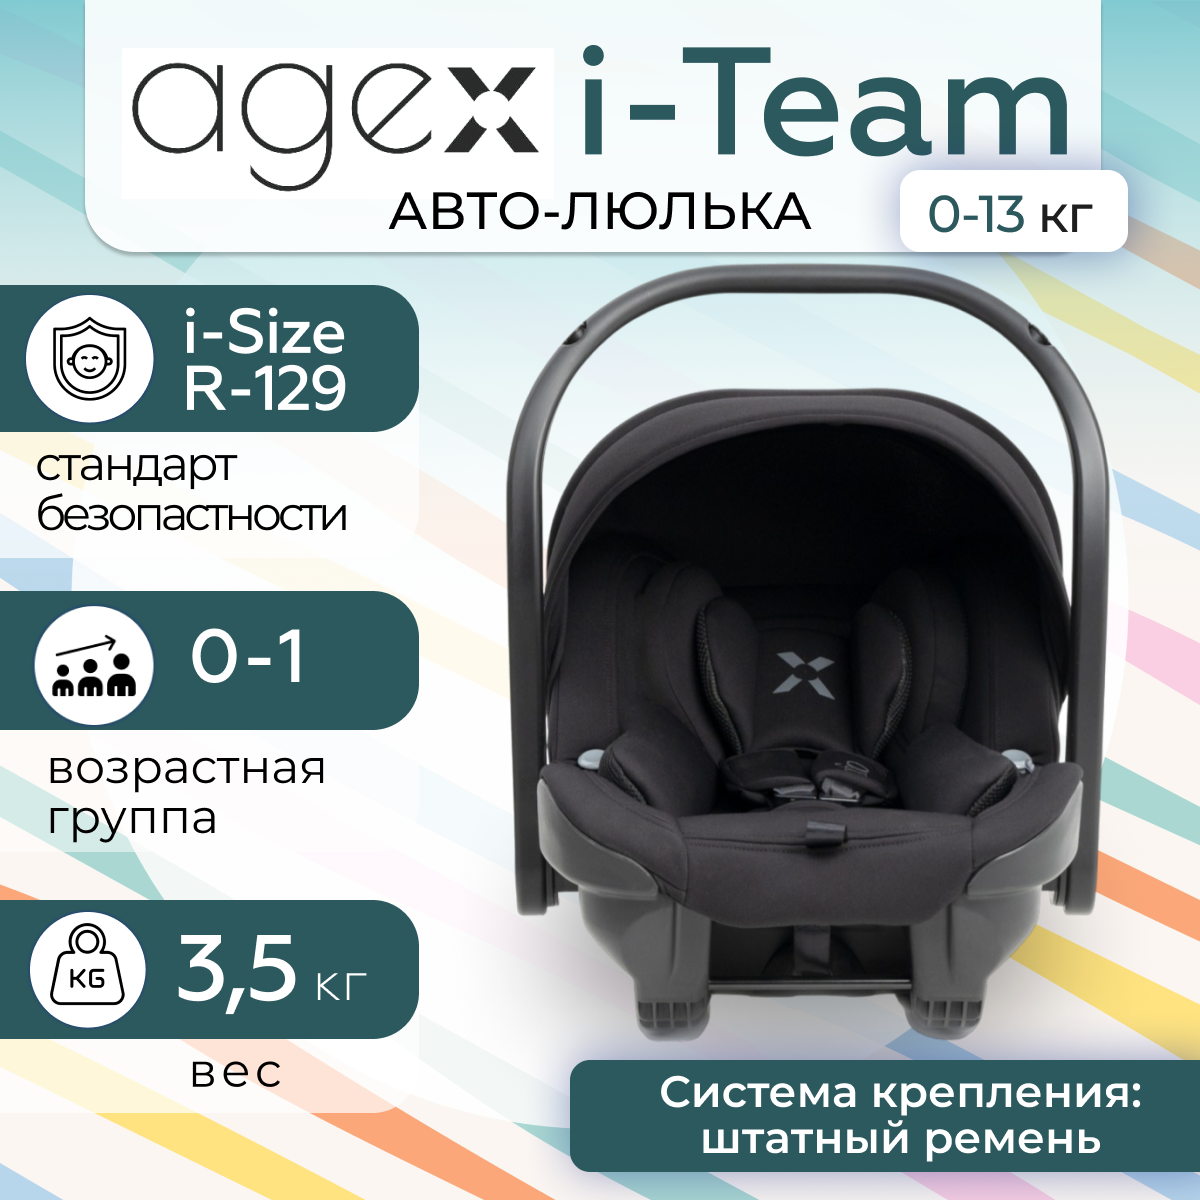 Автокресло Agex i-Team серый, 0-13 кг автокресло agex simple 0 13 кг